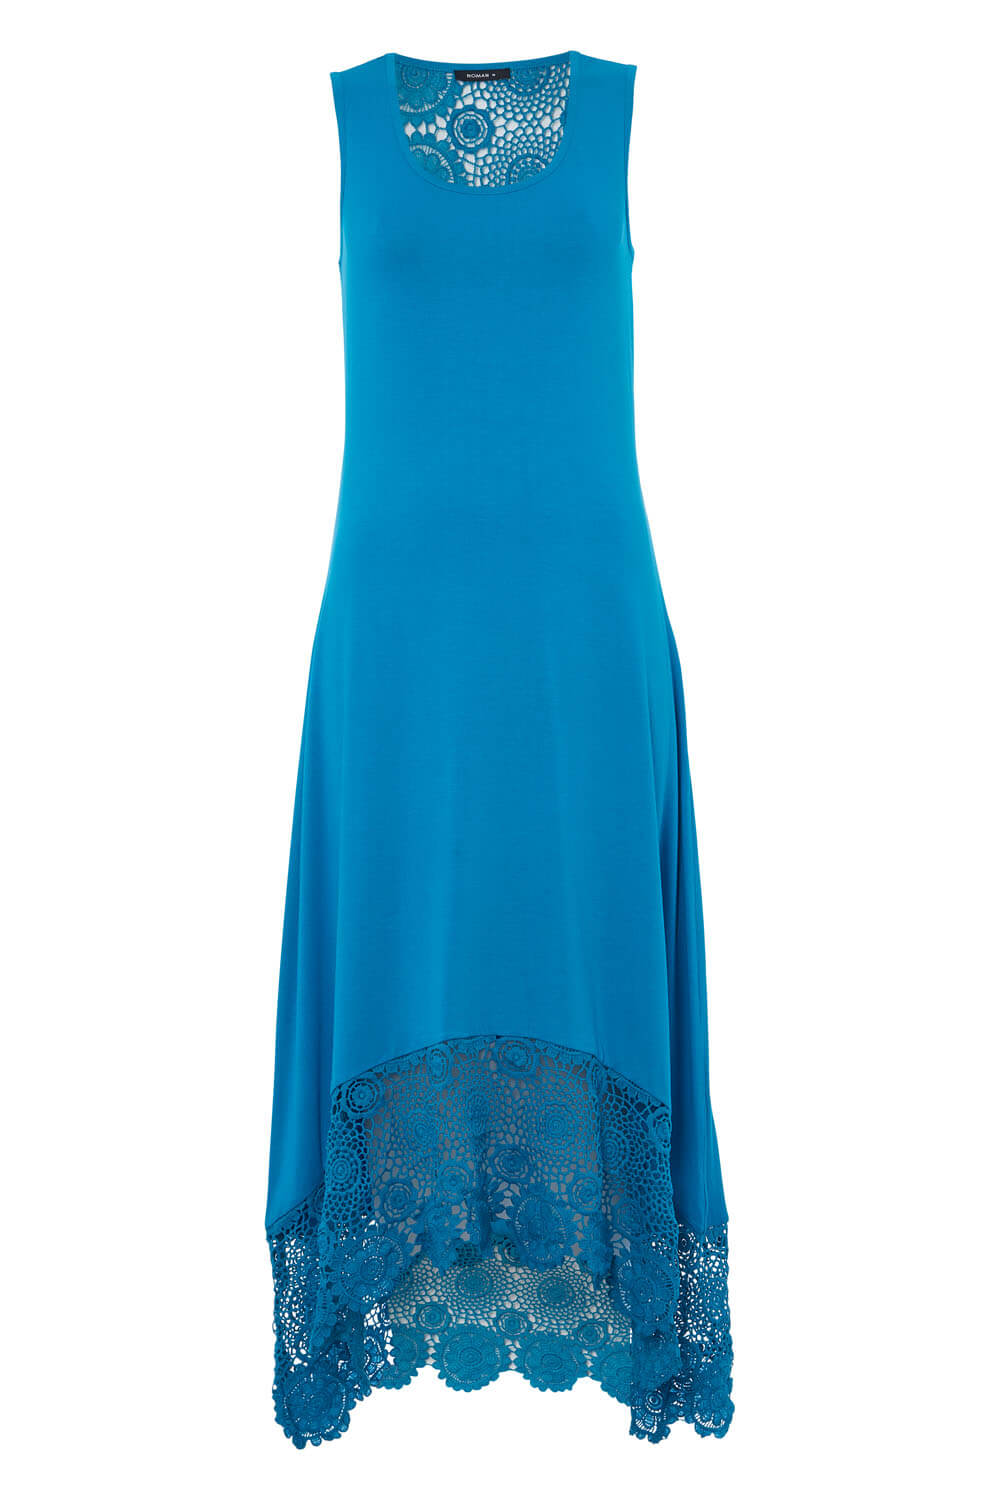 Crochet Hem Midi Dress in Turquoise - Roman Originals UK